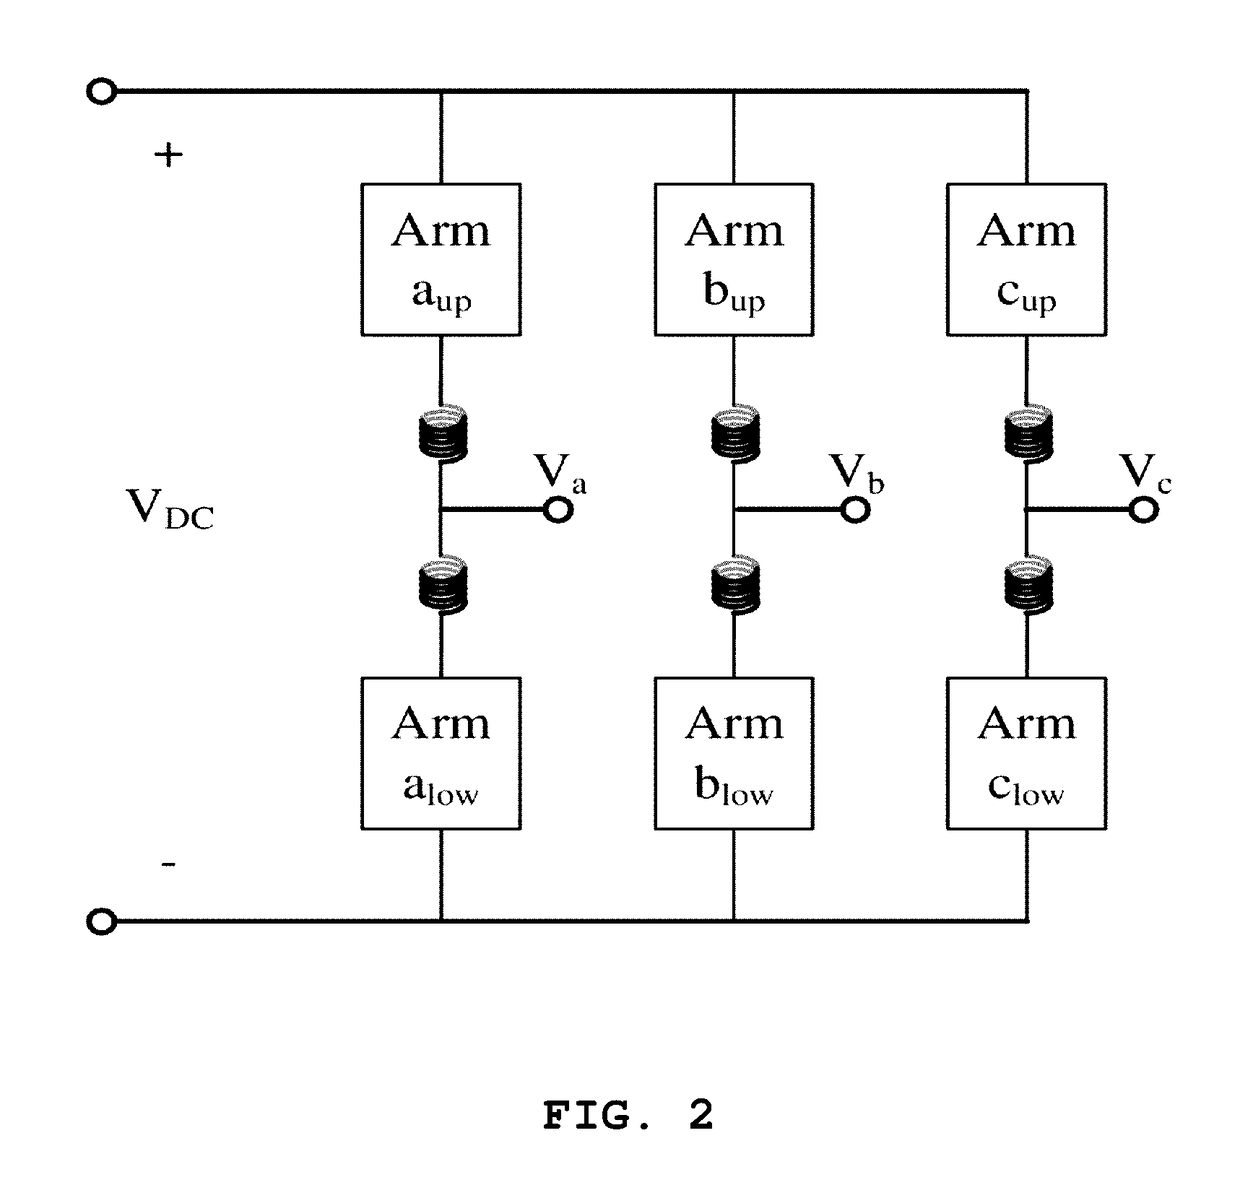 Apparatus and method for controlling asymmetric modular multilevel converter